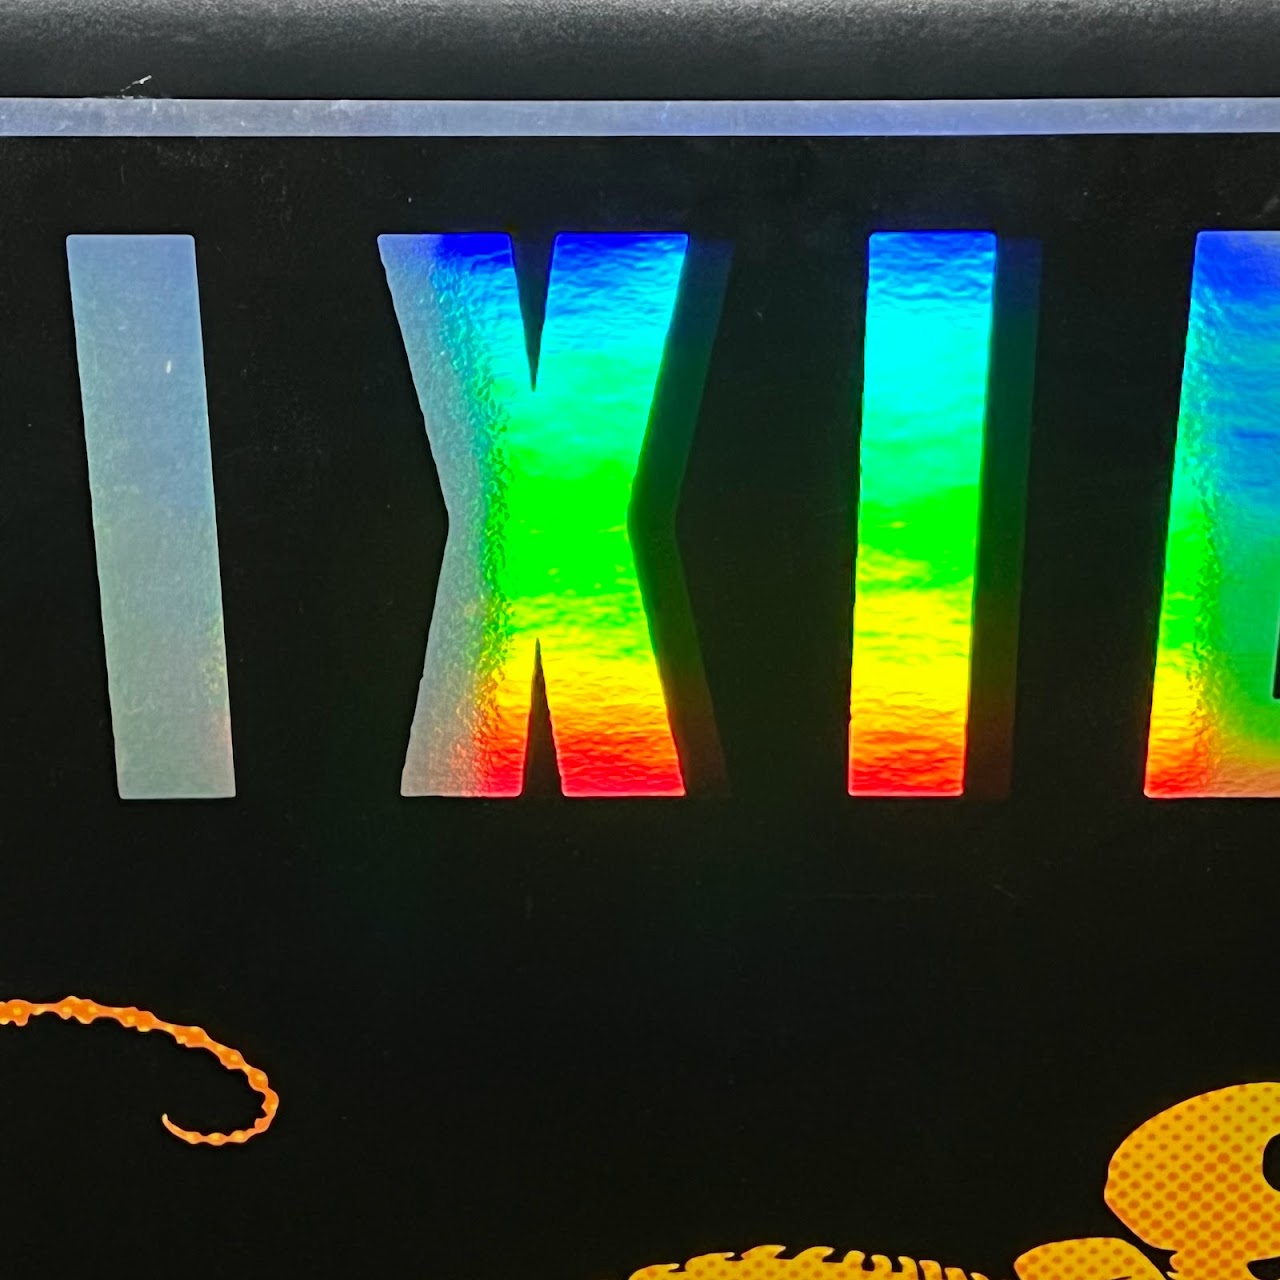 Jason Pulgarin Signed Pixies Silkscreen on Rainbow Foil Concert Poster